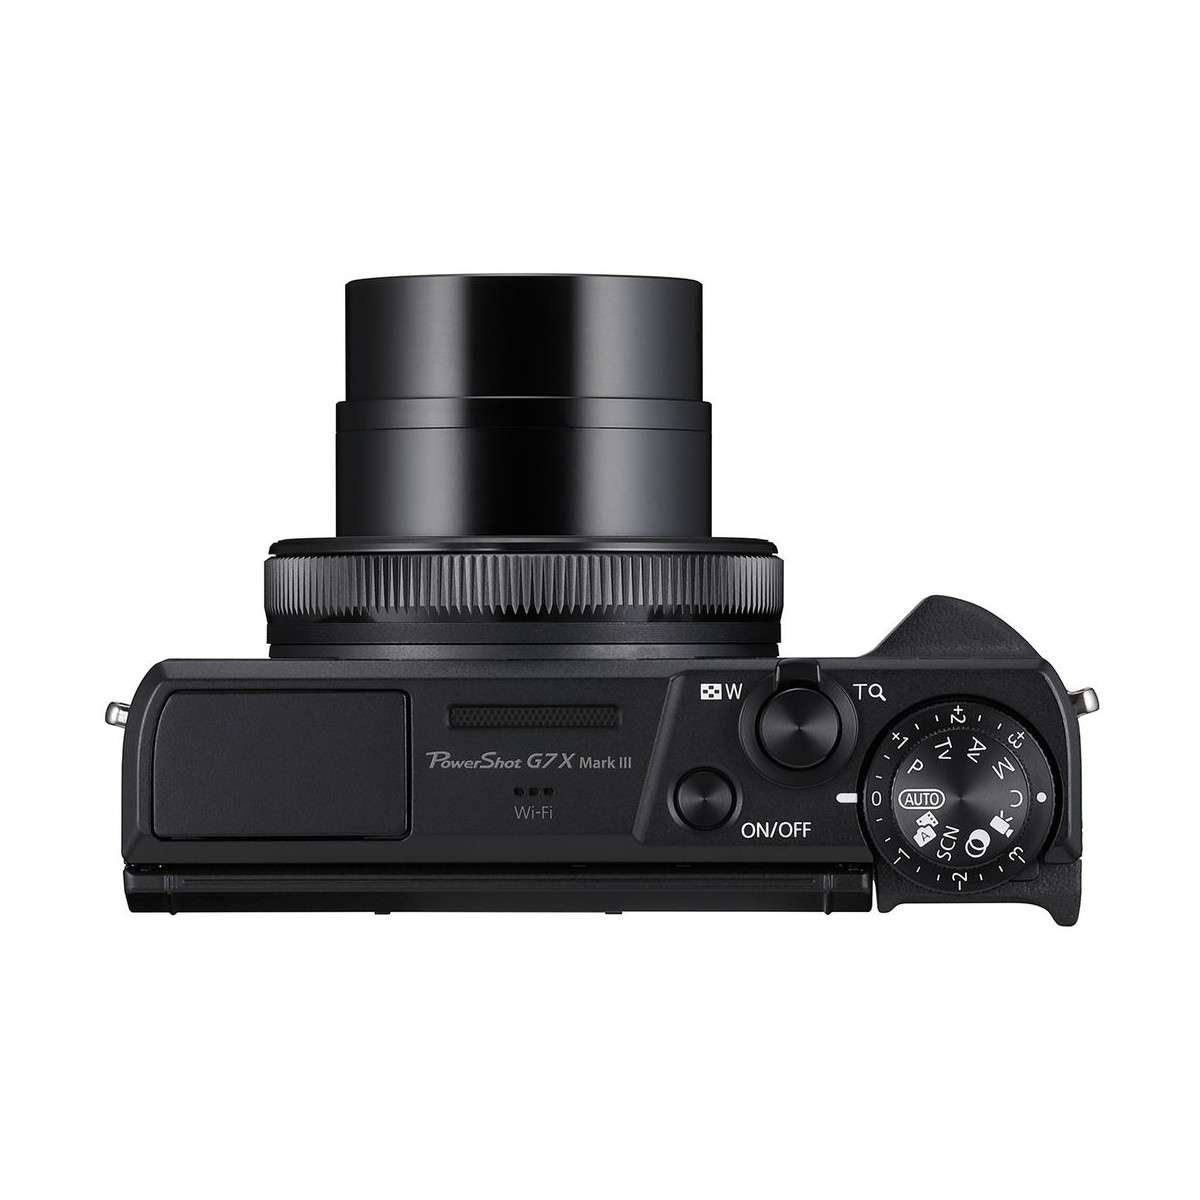 Canon G7 X MARK Ⅲ キャノン カメラ g7x mark3 - カメラ